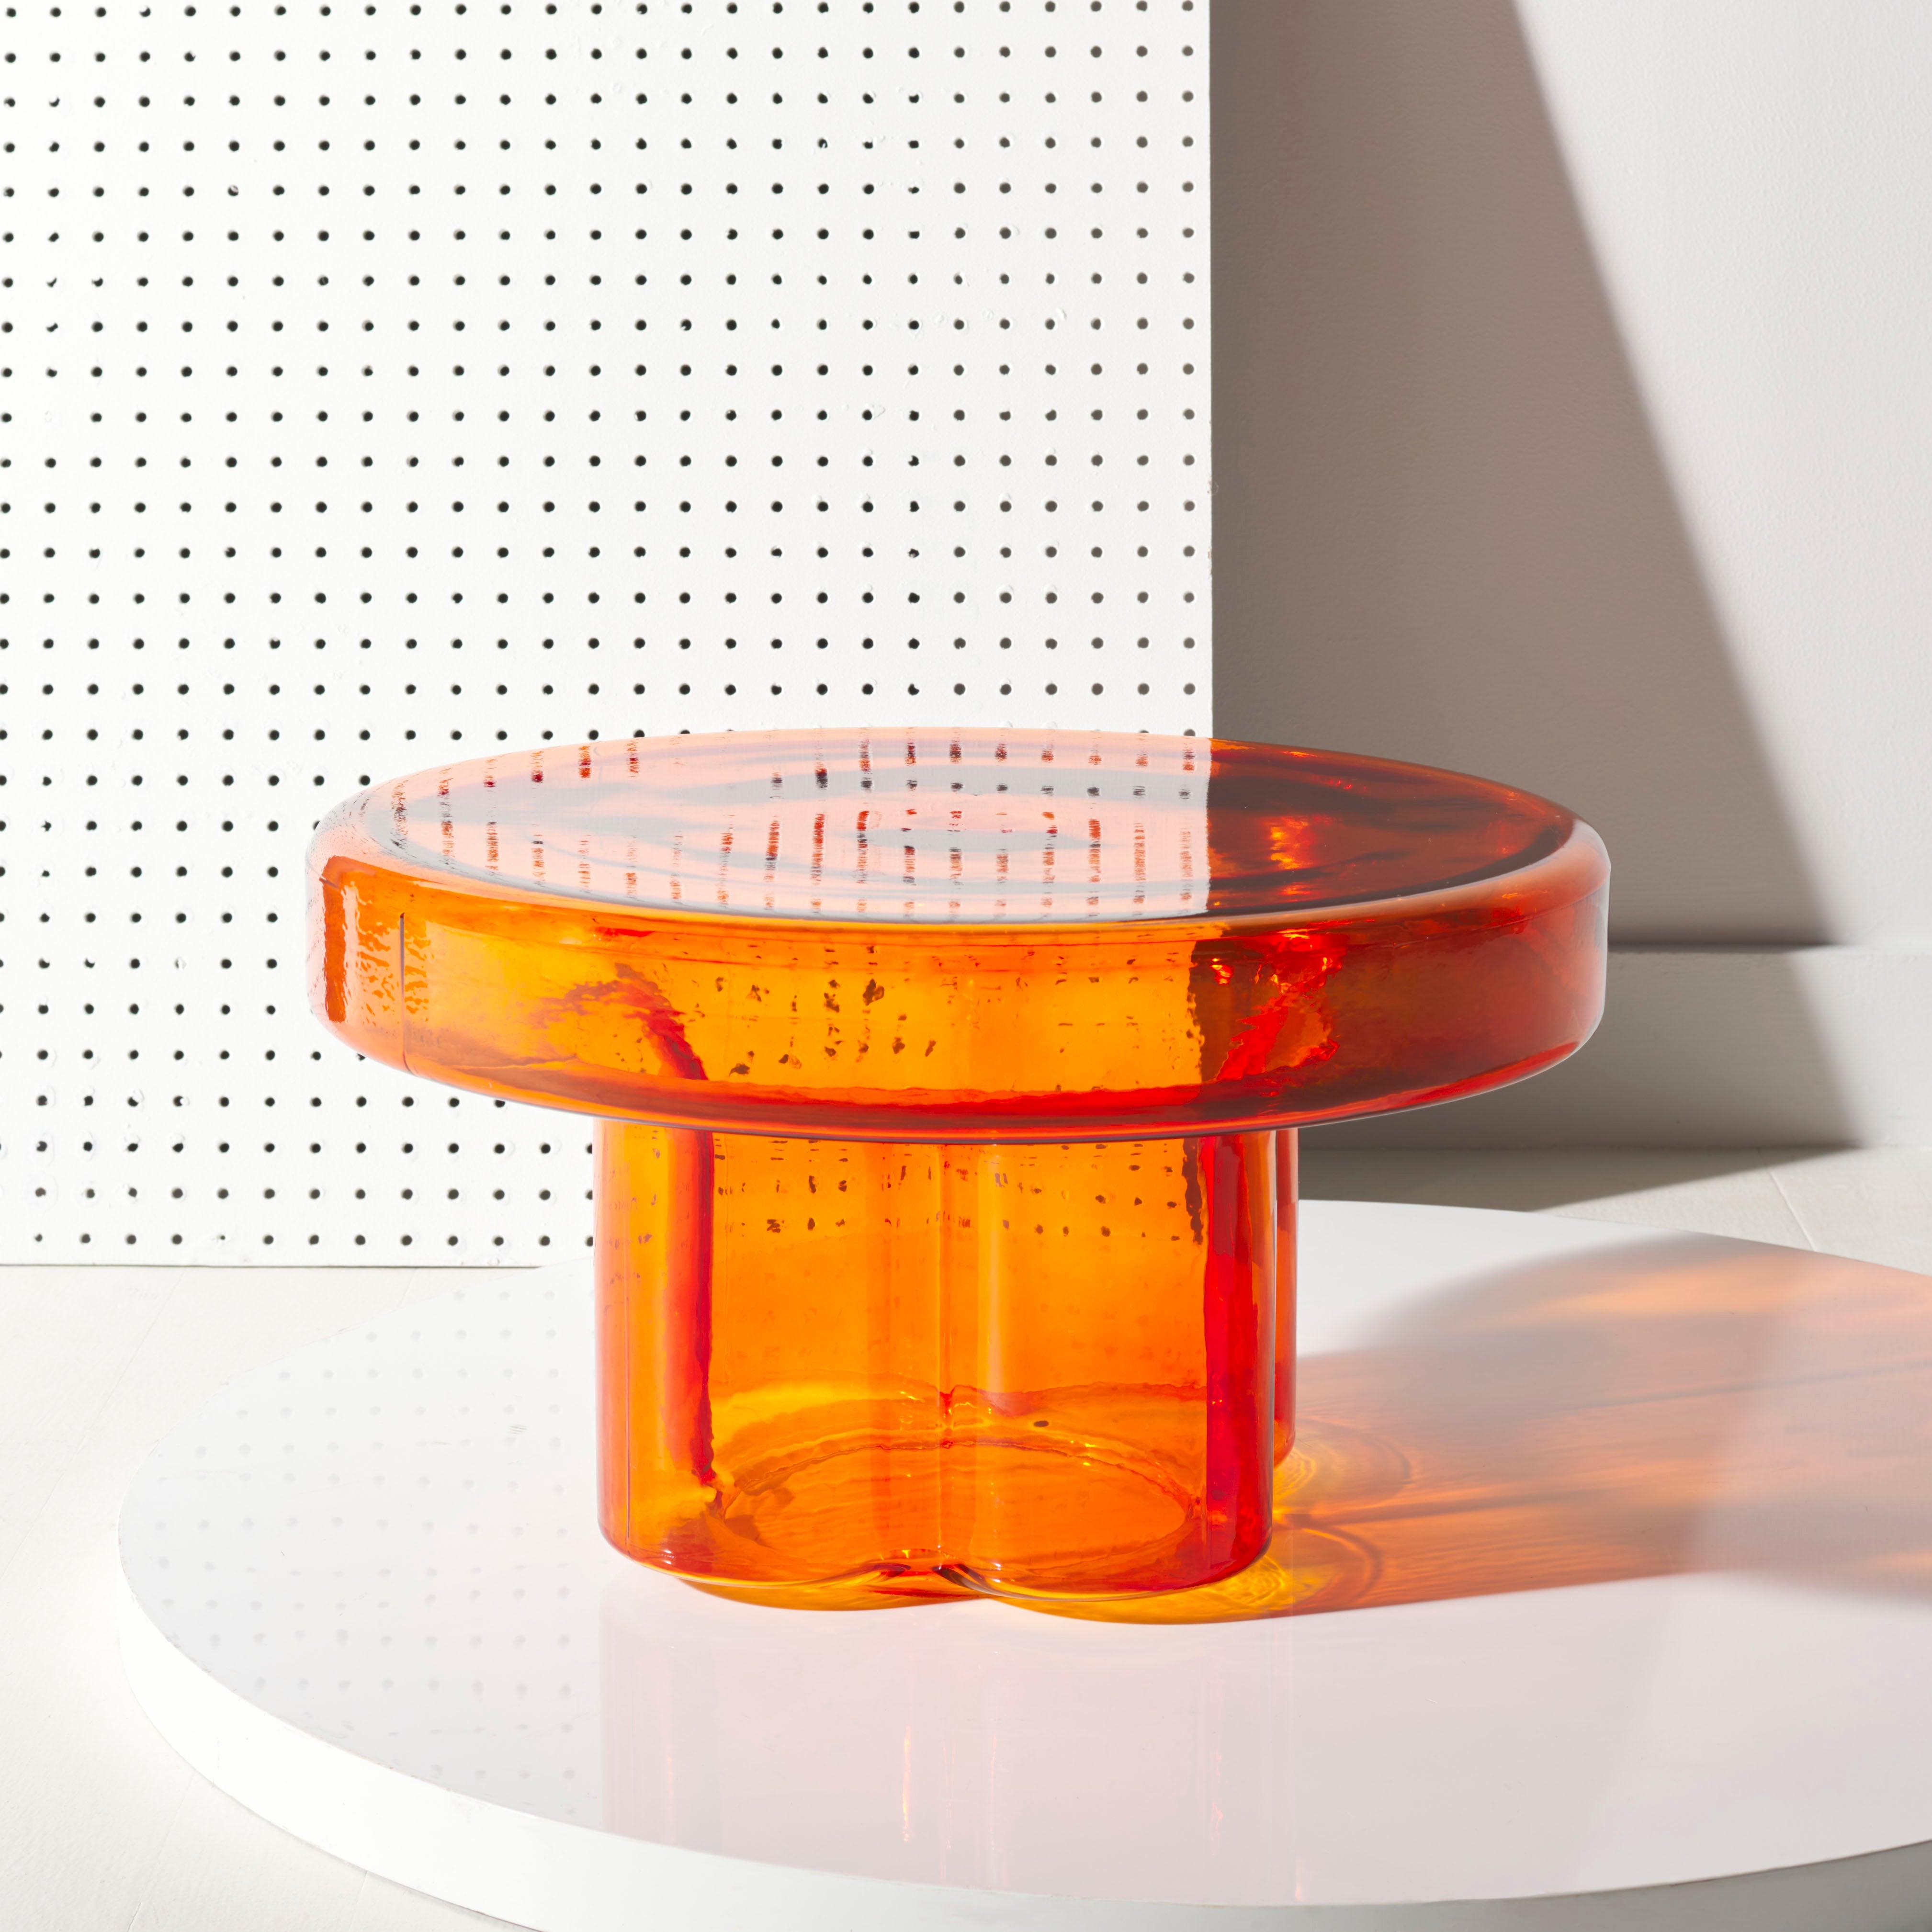 safavieh couture patterson glass coffee table, sfv1200 - Orange